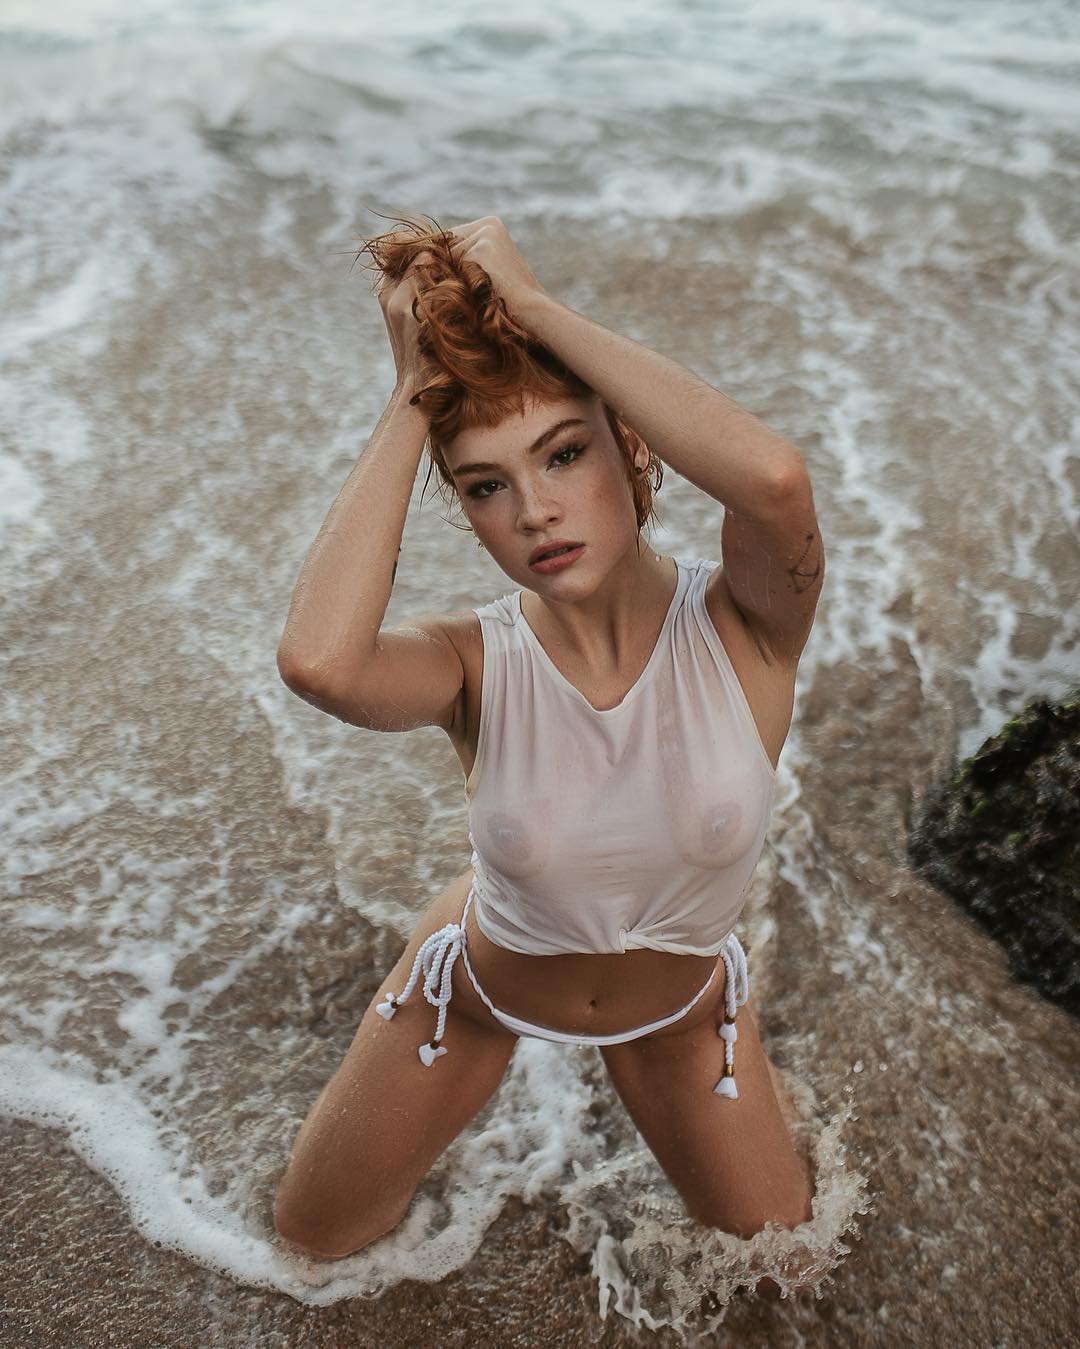 Adalto Jr Fotografo - Modelo ruiva posando de camiseta molhada no mar